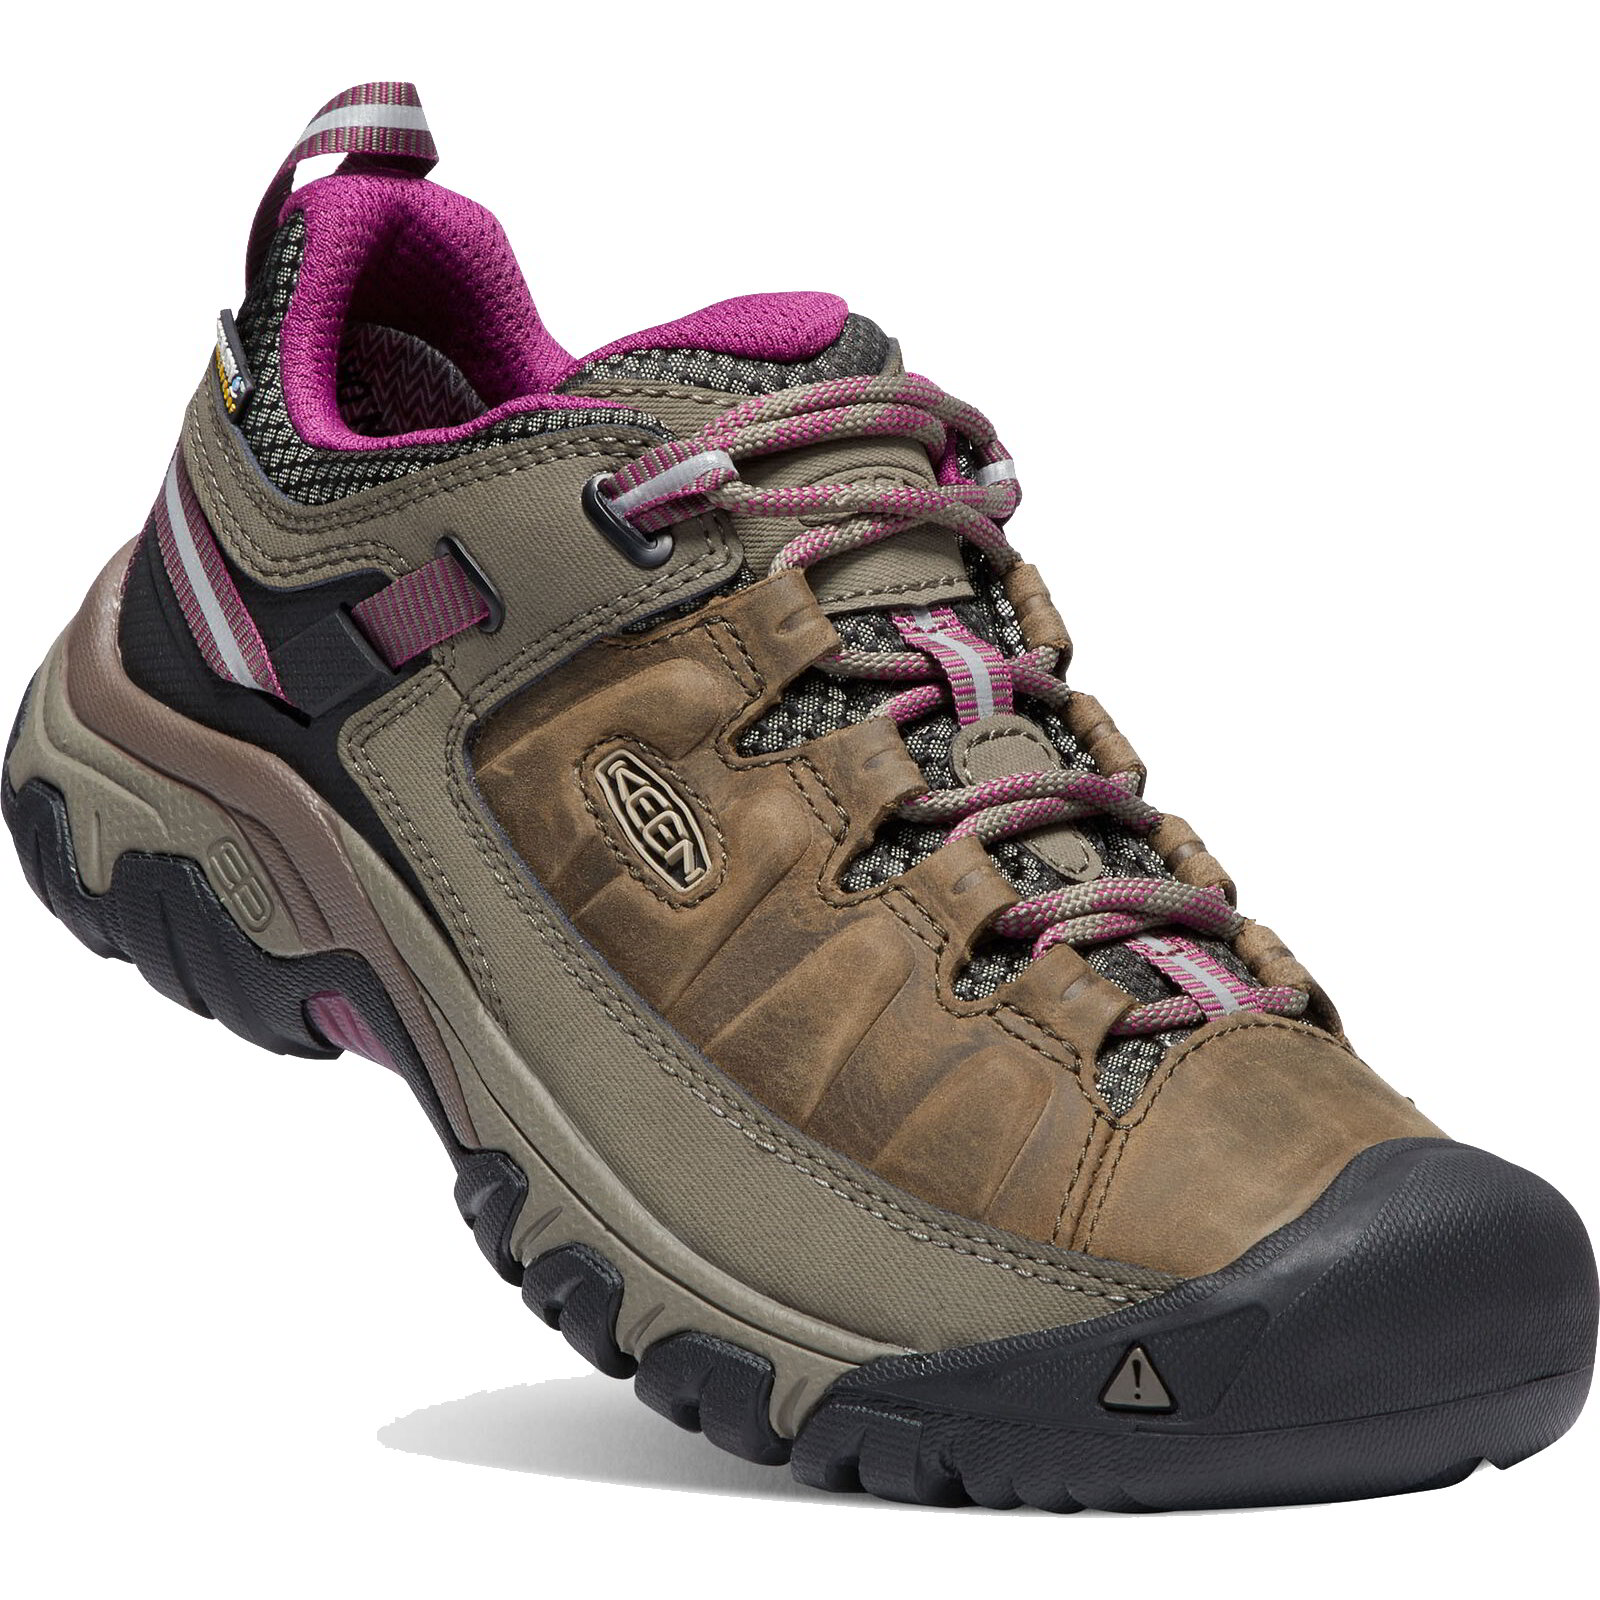 Keen Women's Targhee III WP Waterproof Walking Hiking Shoes - UK 5.5